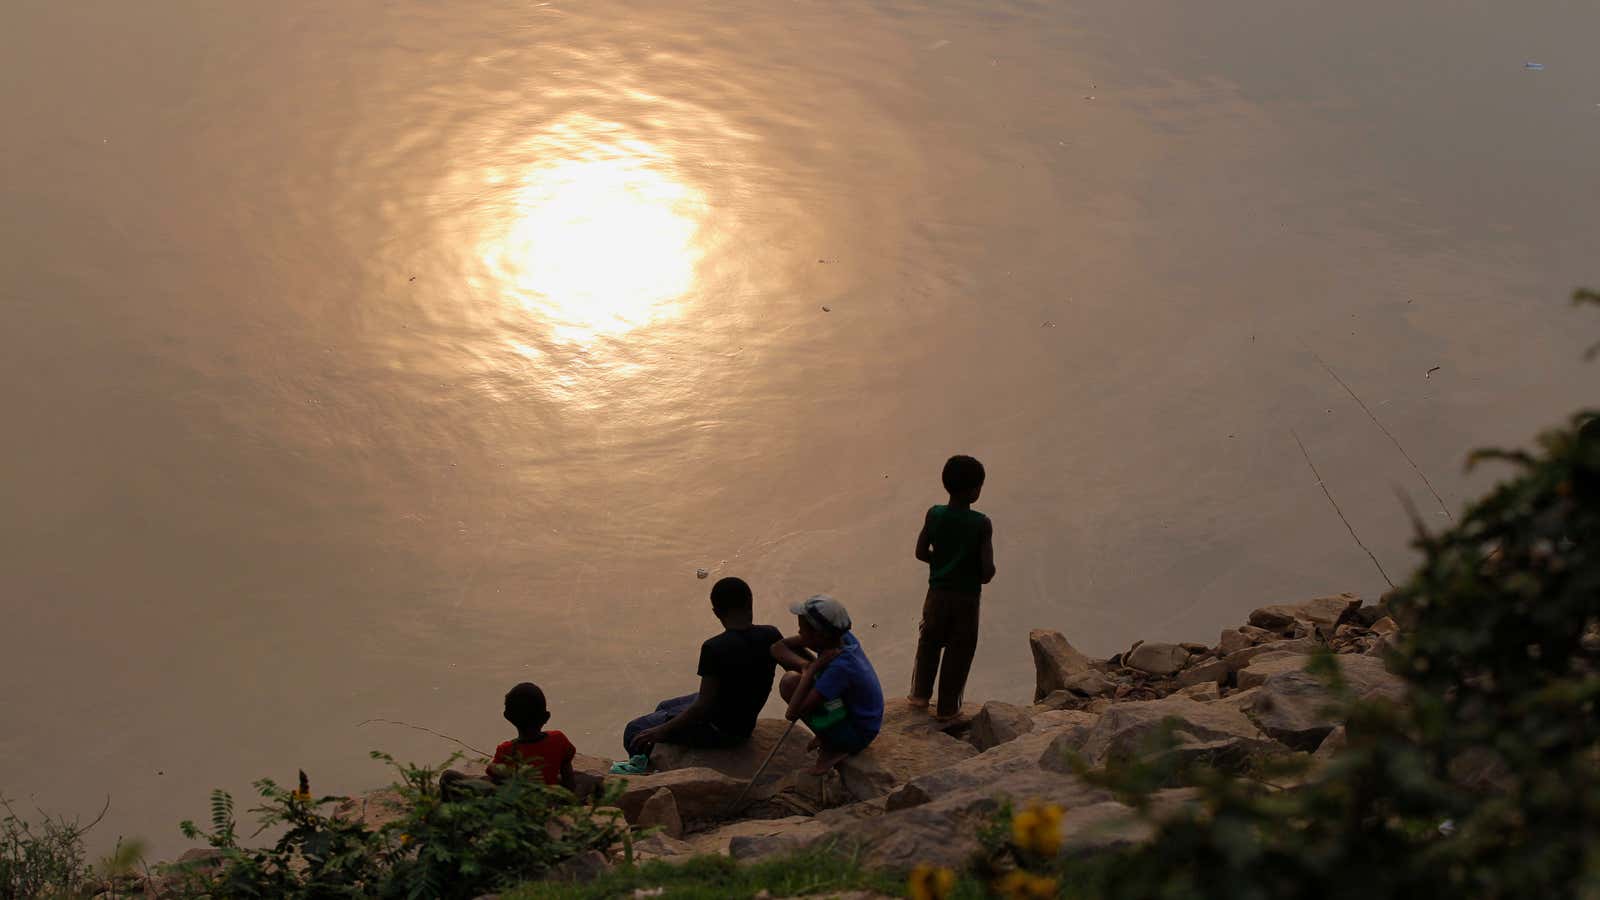 Boys fish along the banks of the Ikopa river in Madagascar’s capital Antananarivo